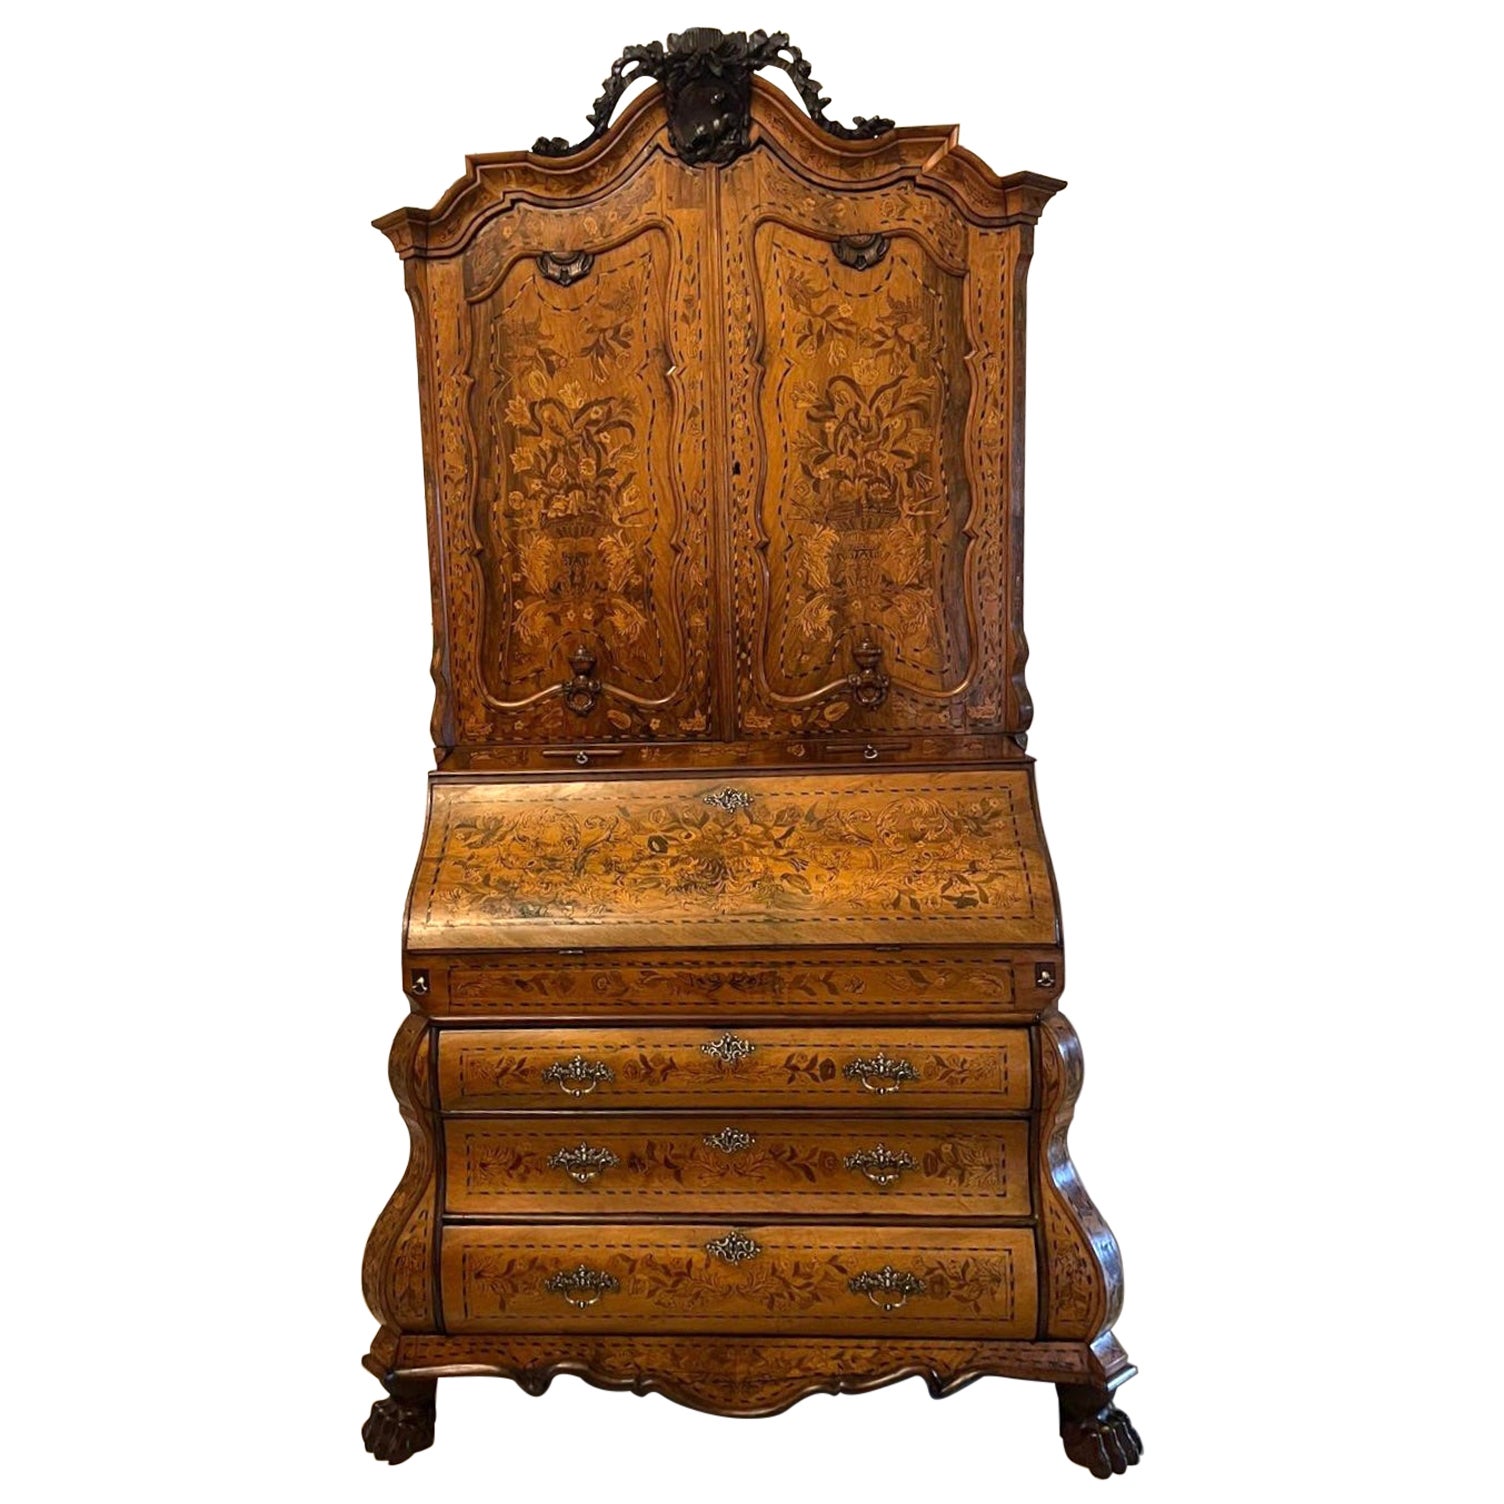 Outstanding Quality Antique Dutch Marquetry Inlaid Burr Walnut Bureau Bookcase